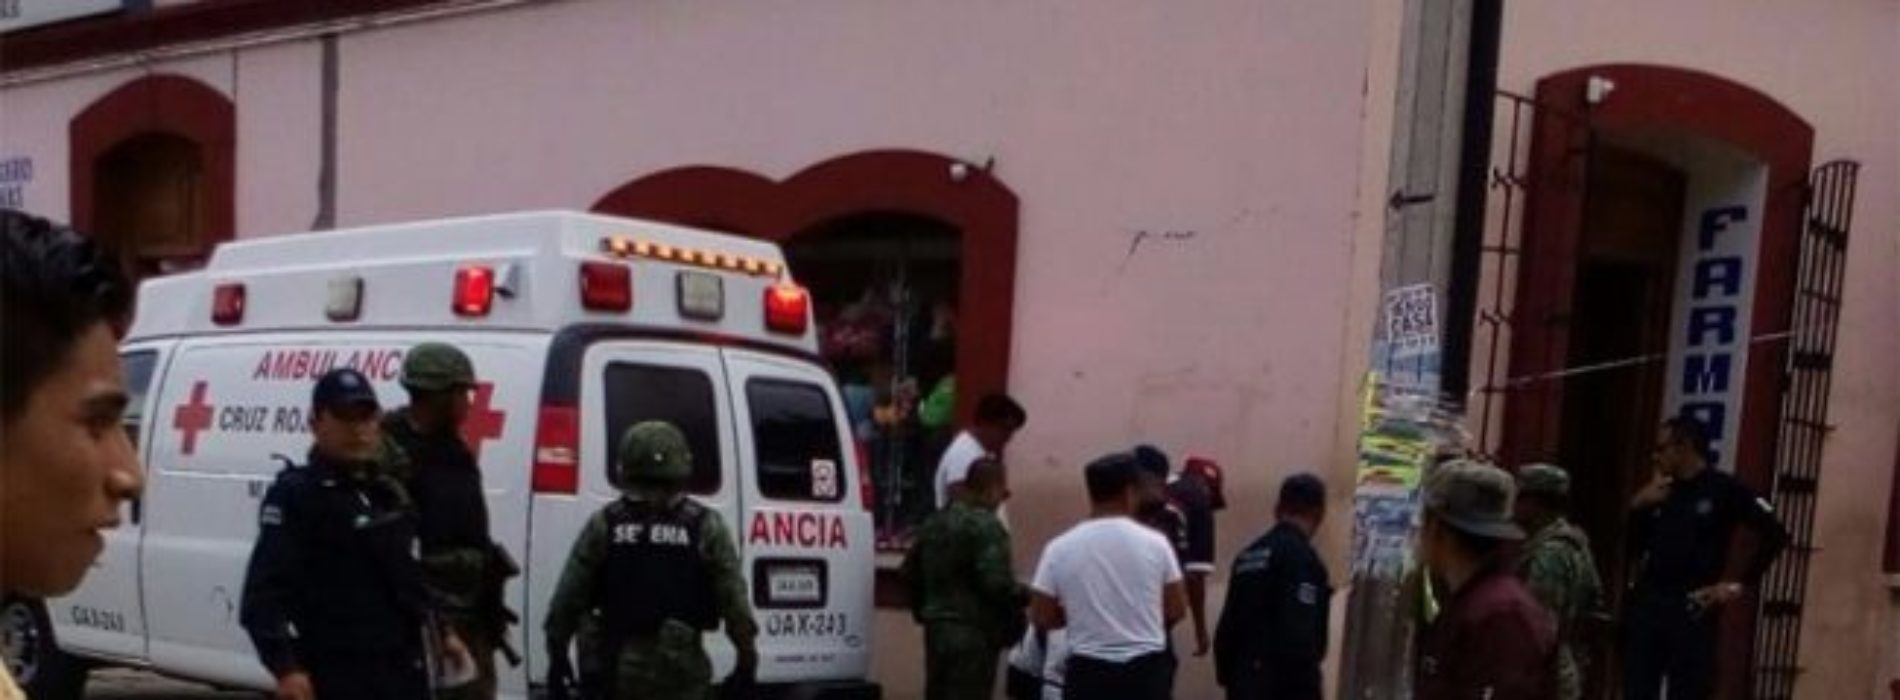 Hallan muerte dos personas de forma extraña, en hoteles de
Oaxaca